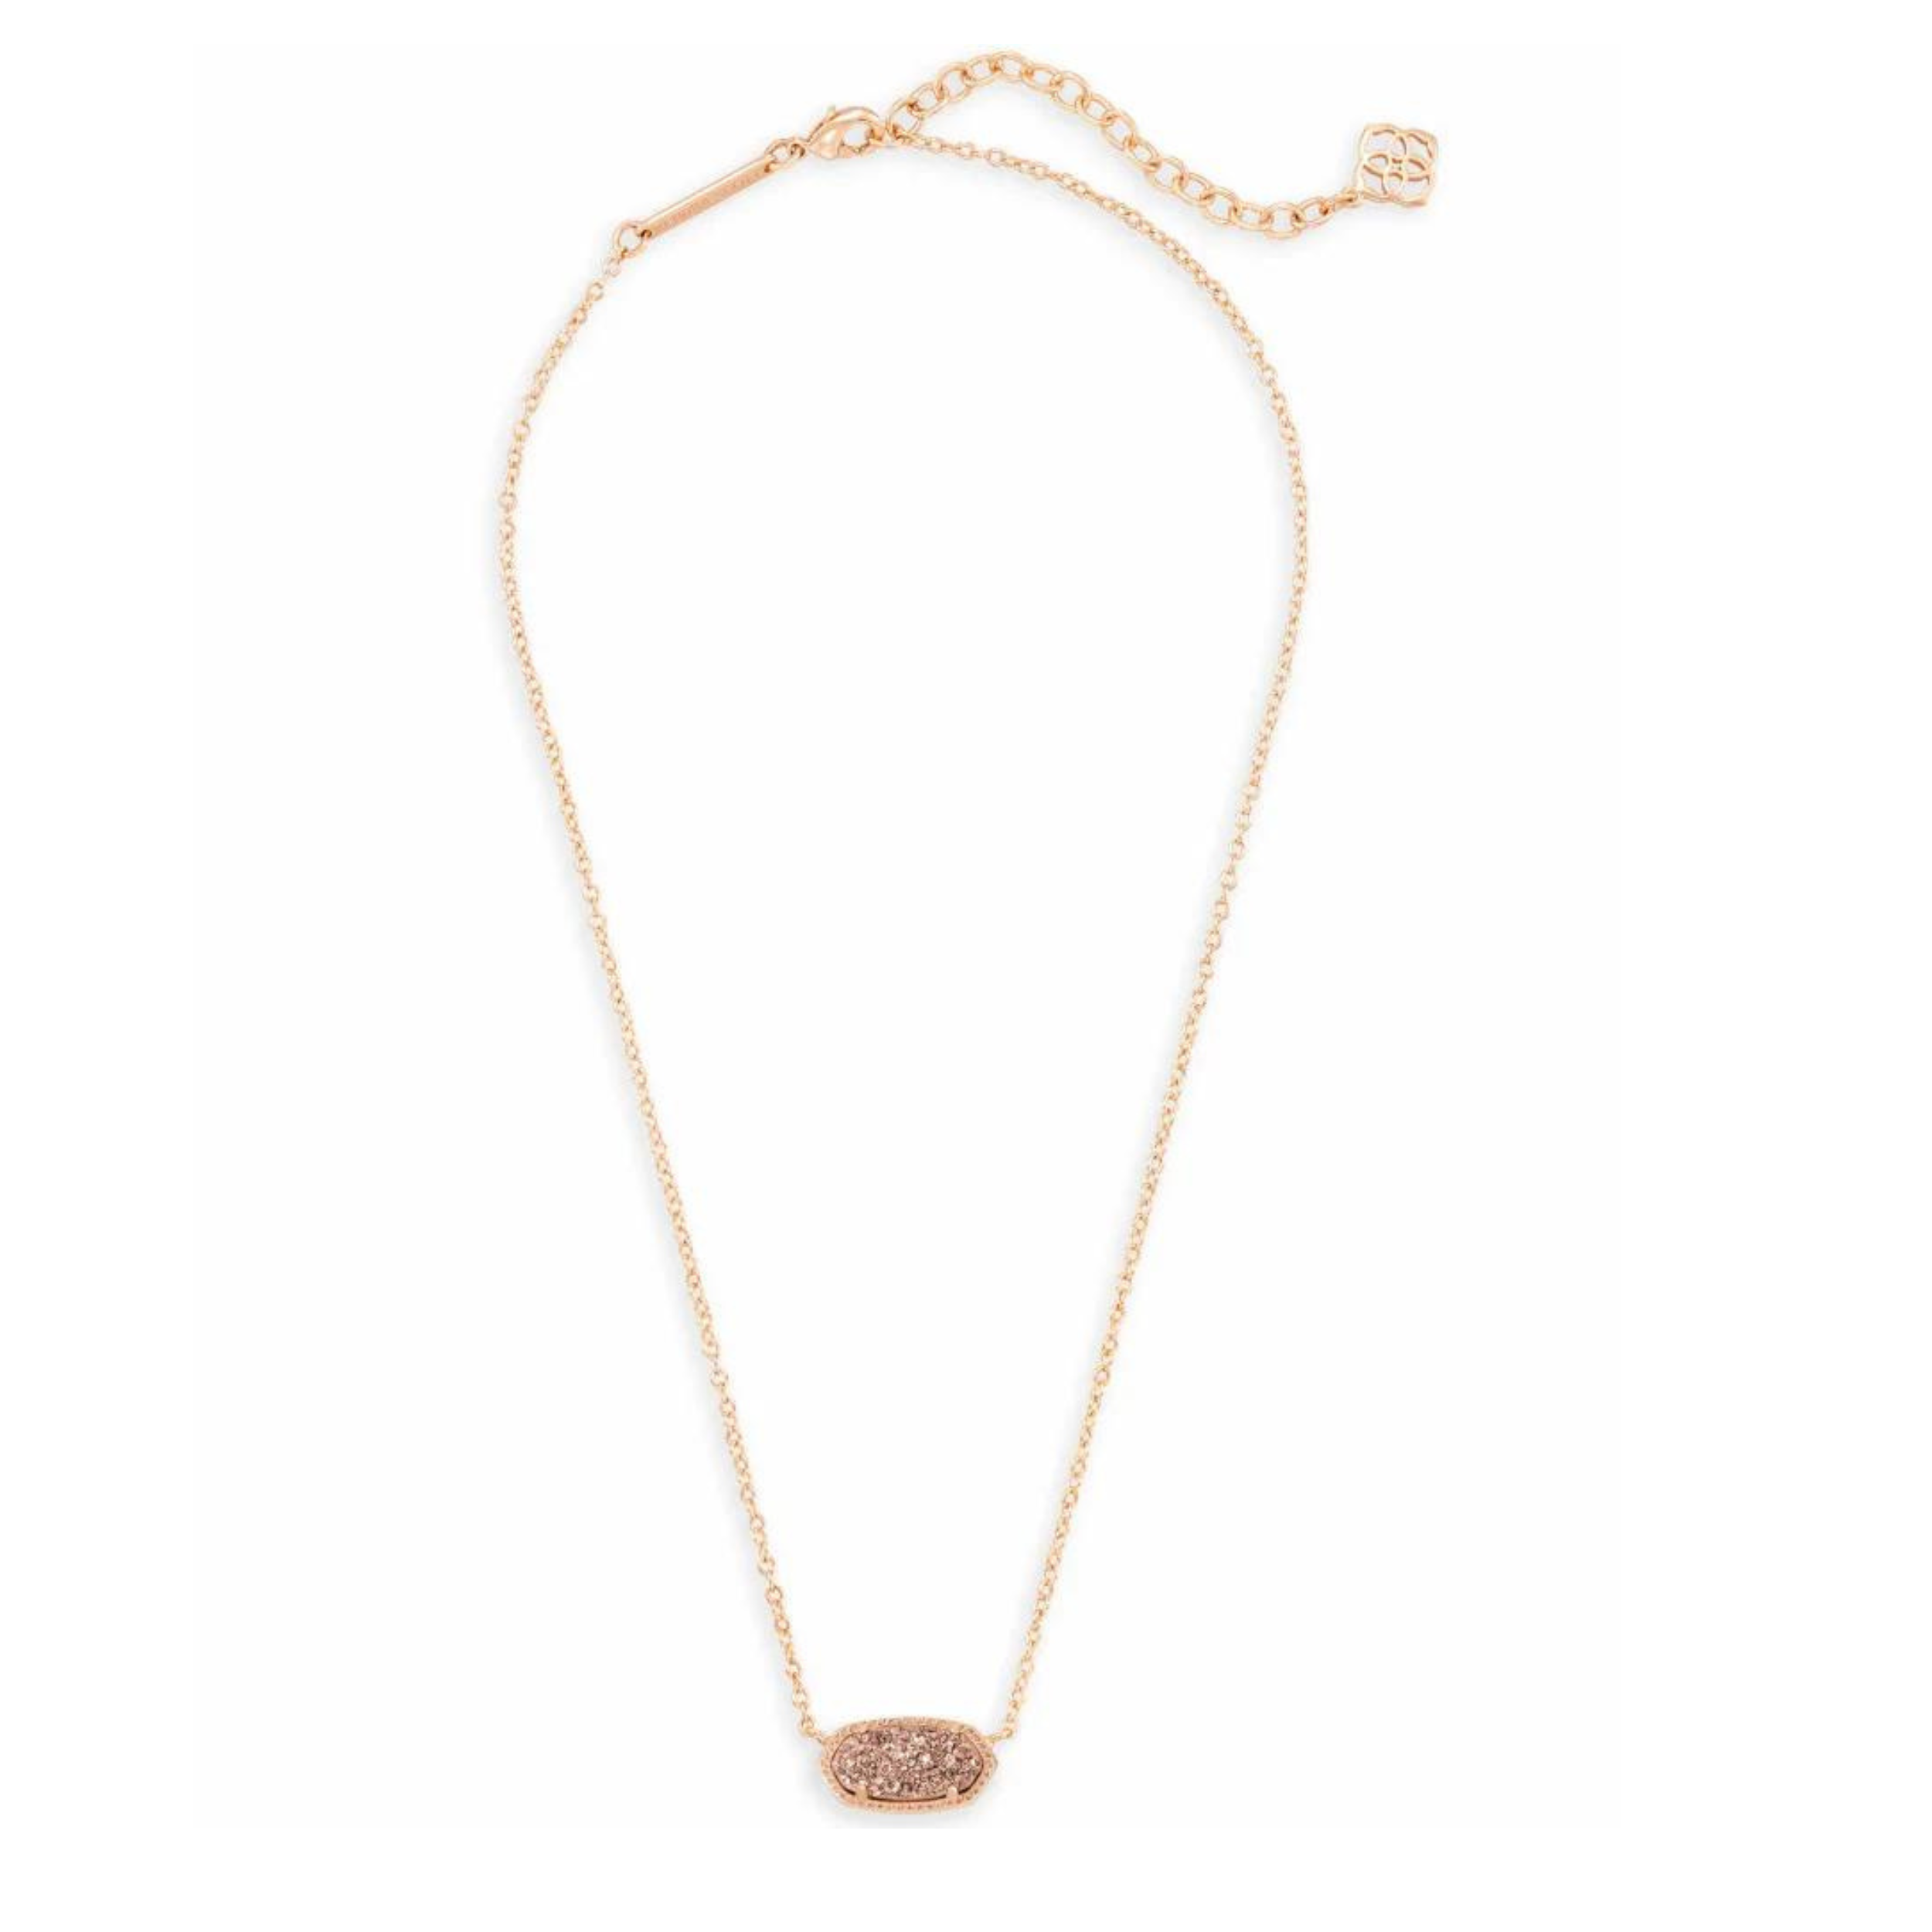 Kendra Scott | Elisa Rose Gold Pendant Necklace in Rose Gold Drusy - Giddy Up Glamour Boutique